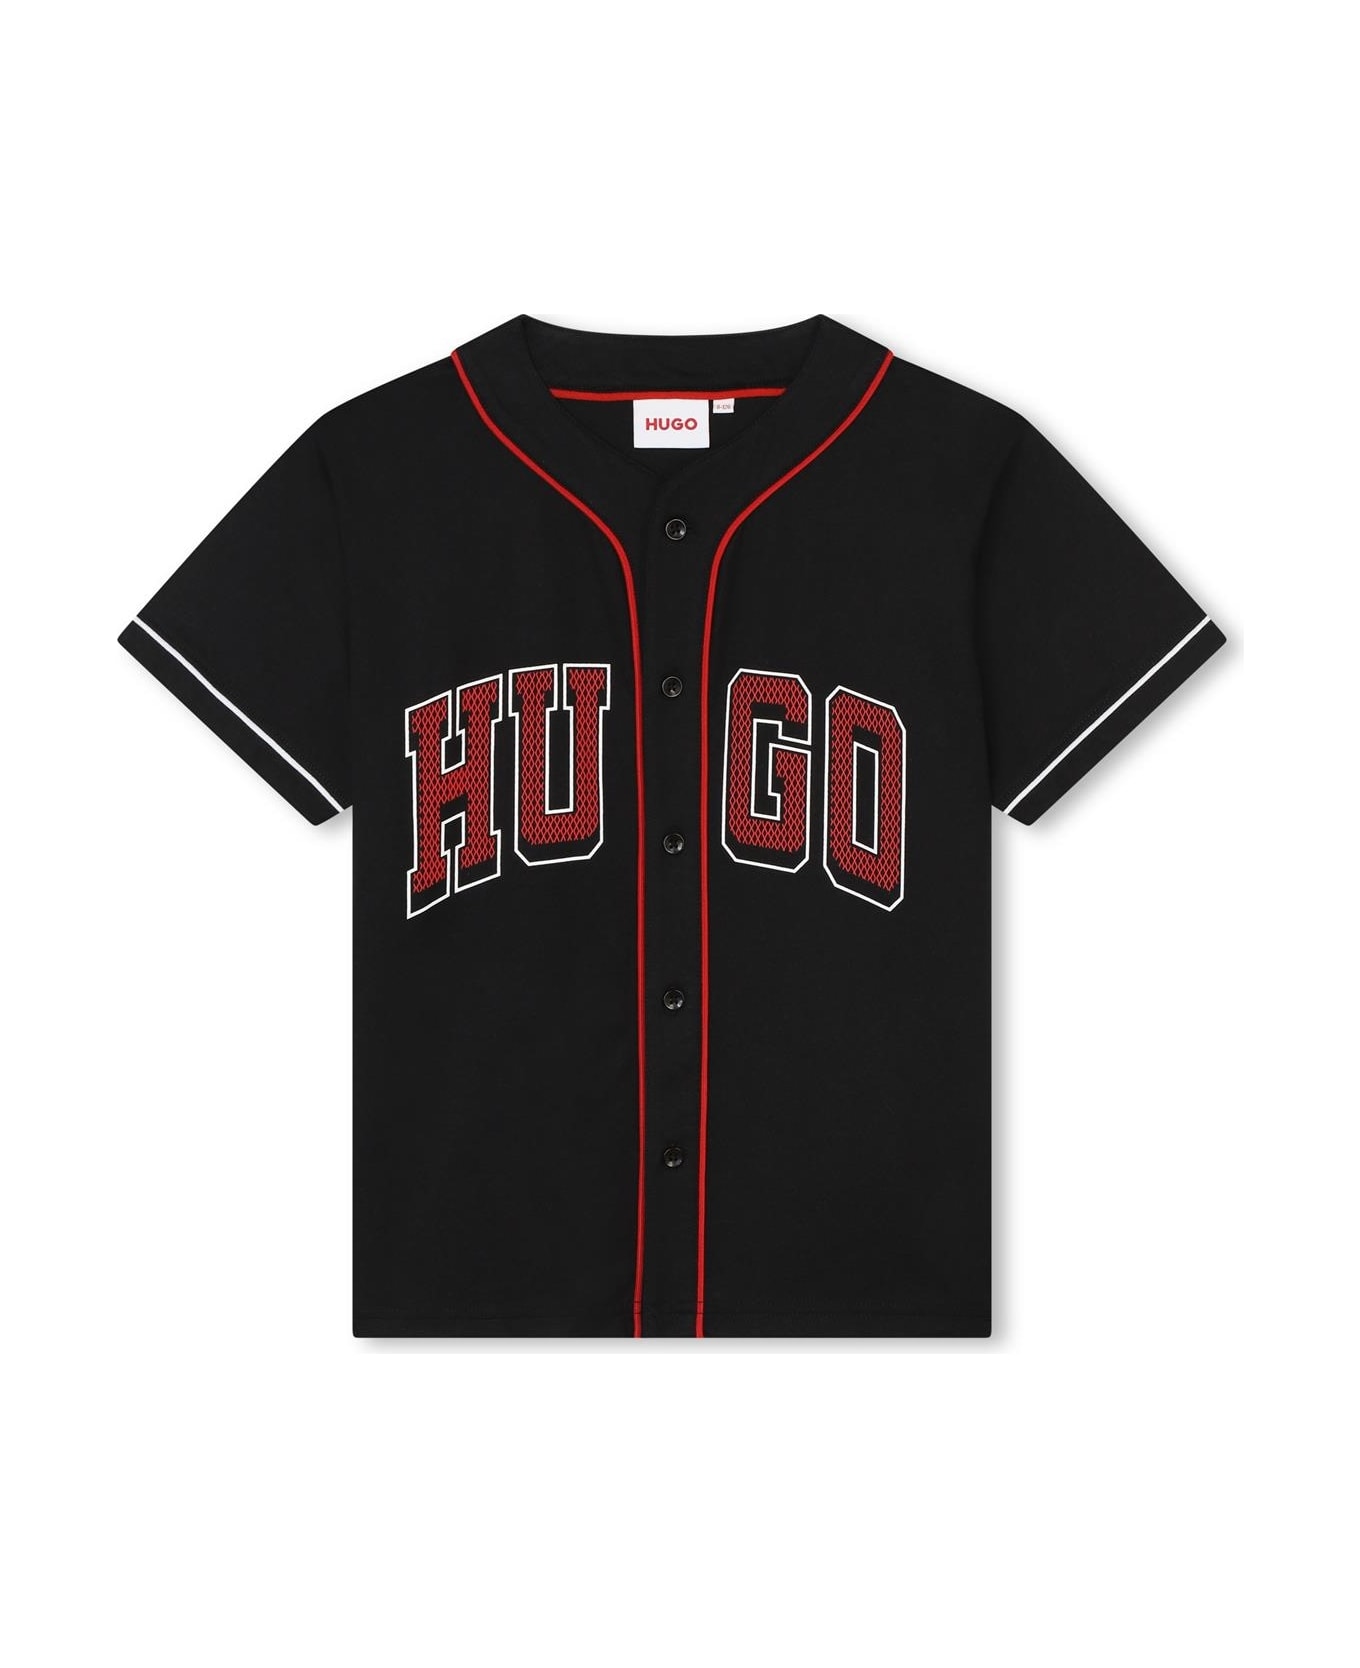 Hugo Boss Shirt With Print - Black シャツ